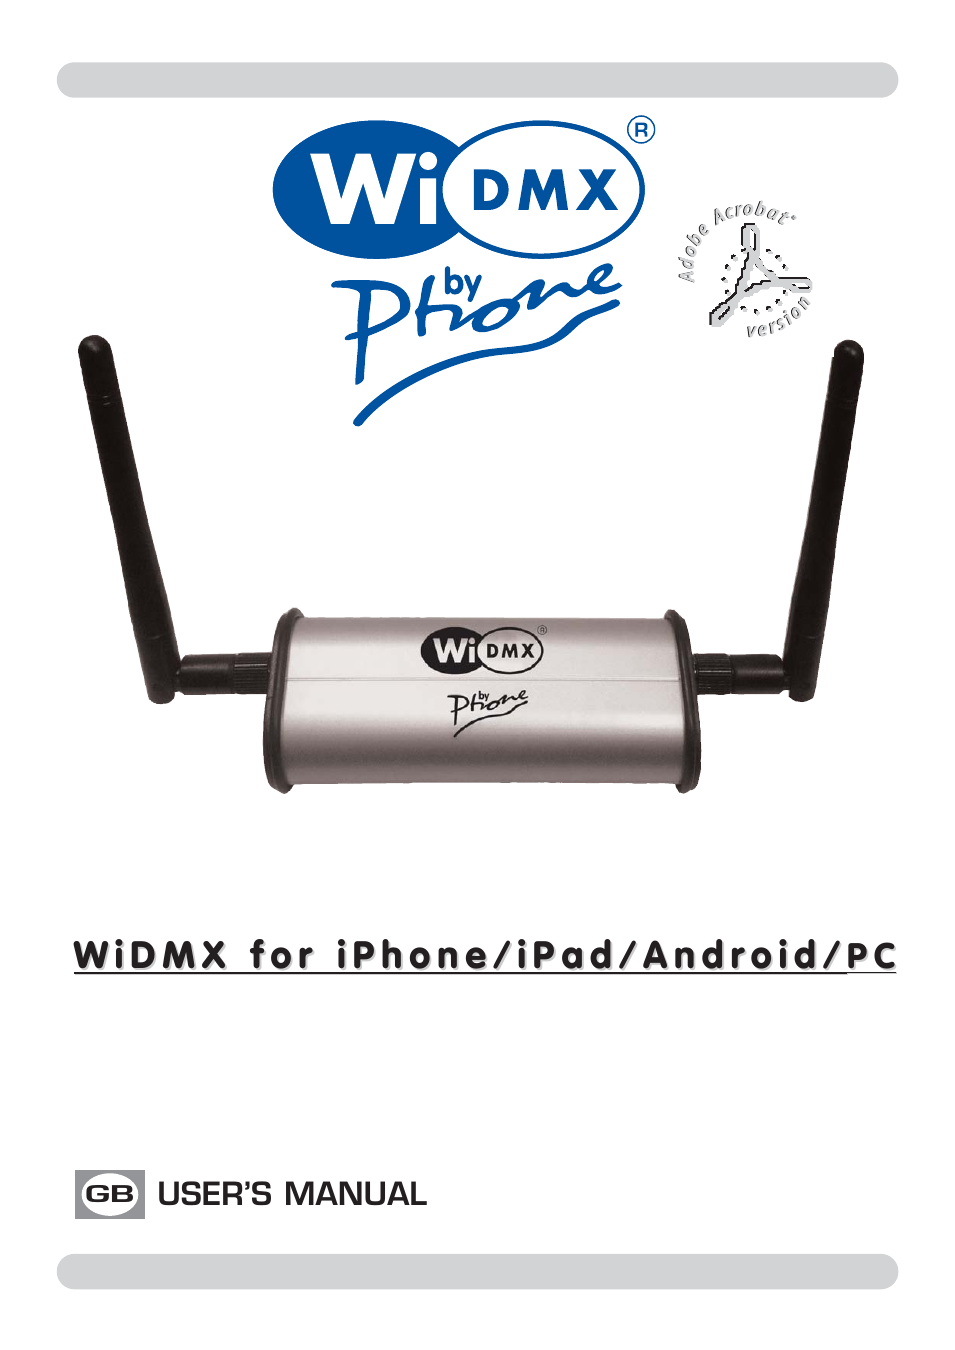 WiDMX by Phone